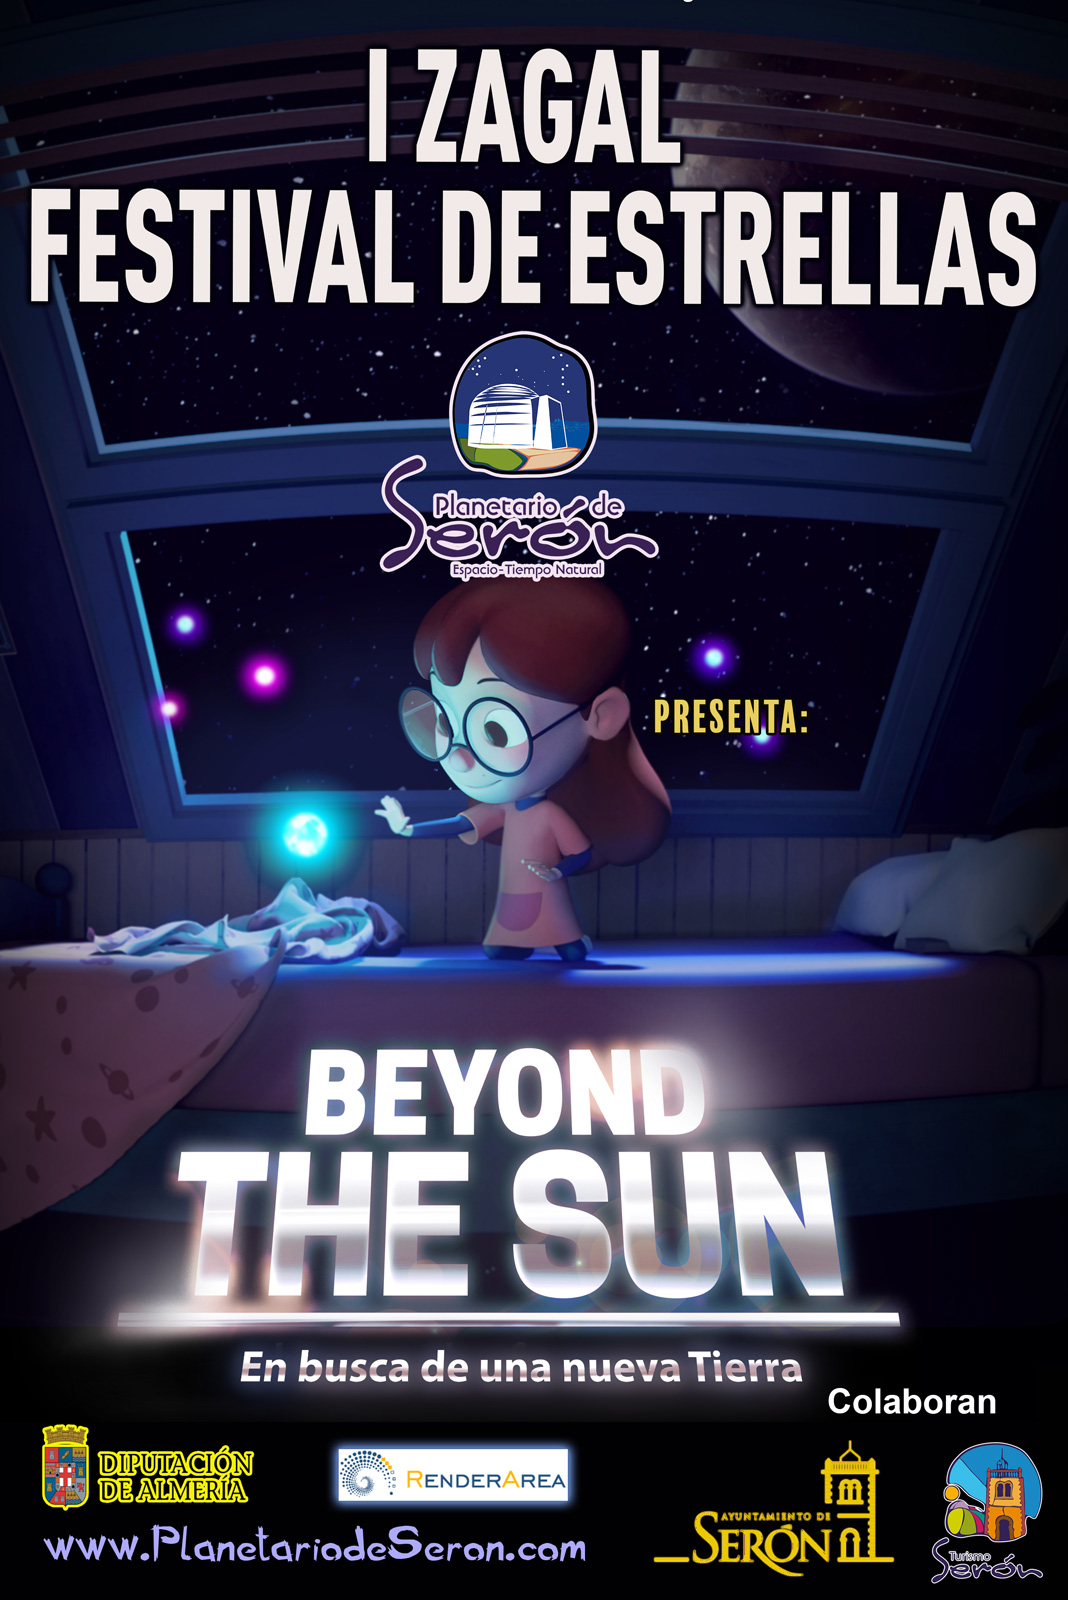 ZAGAL: Beyond the Sun